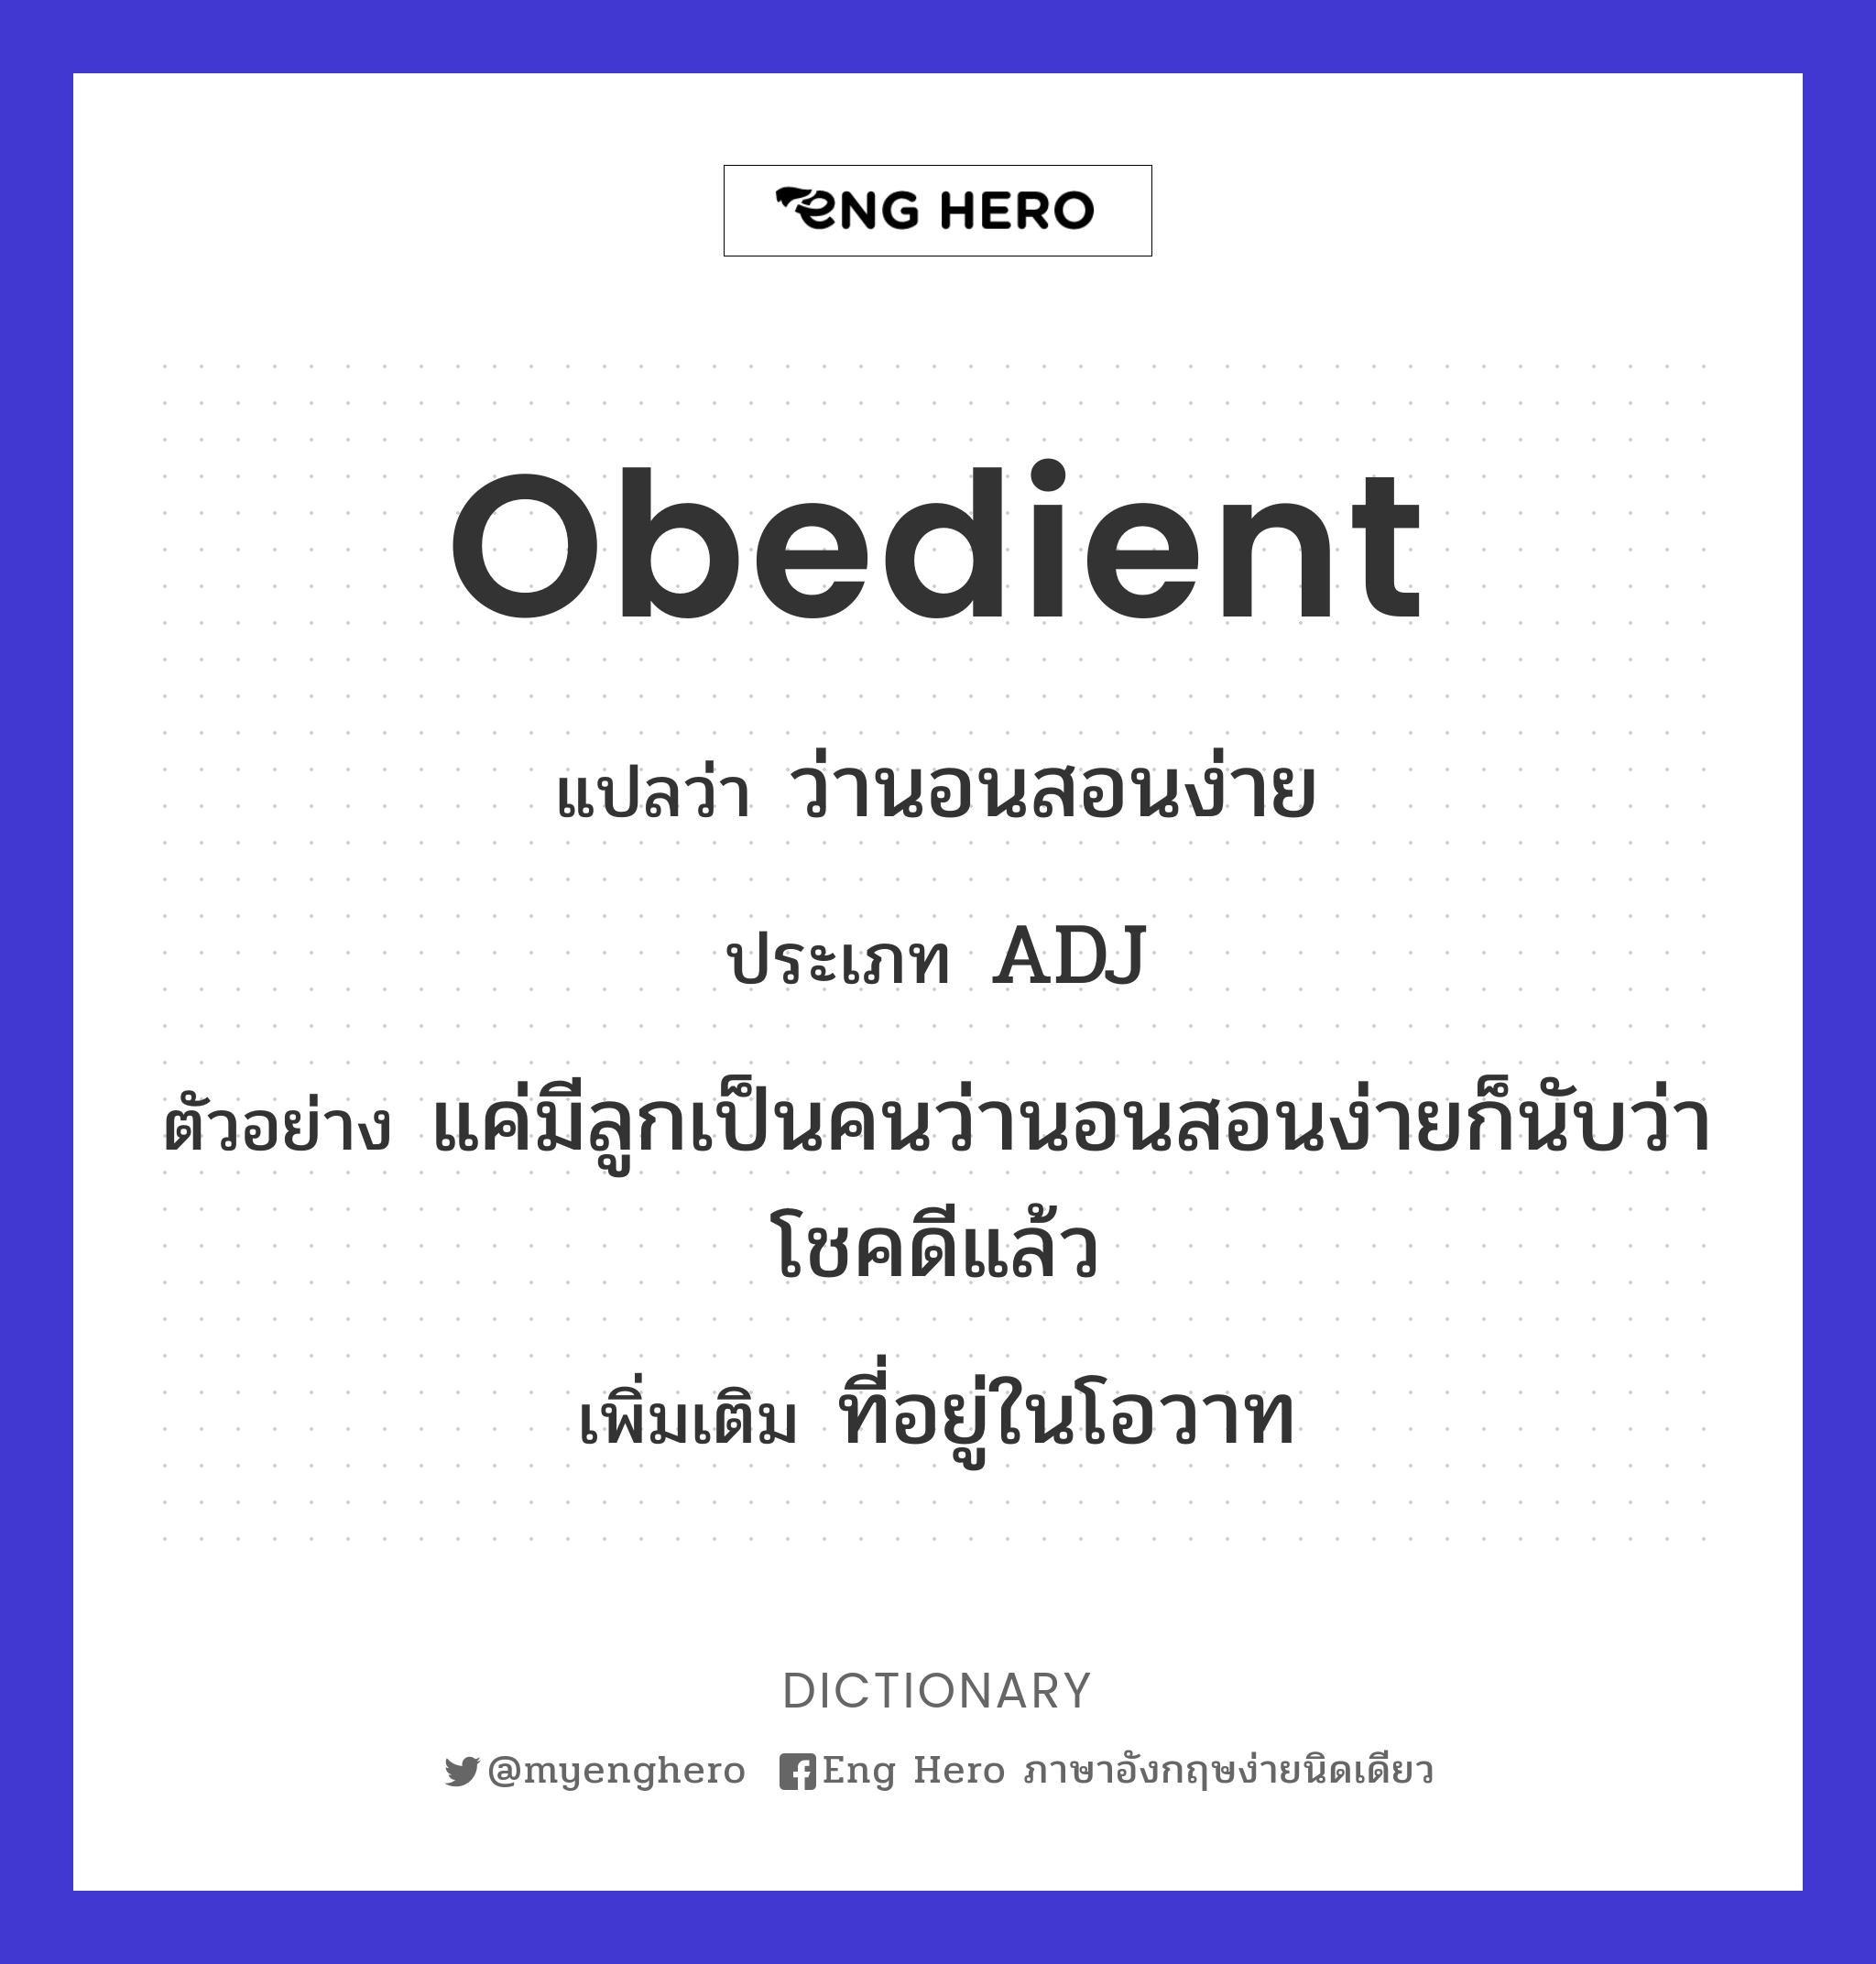 obedient